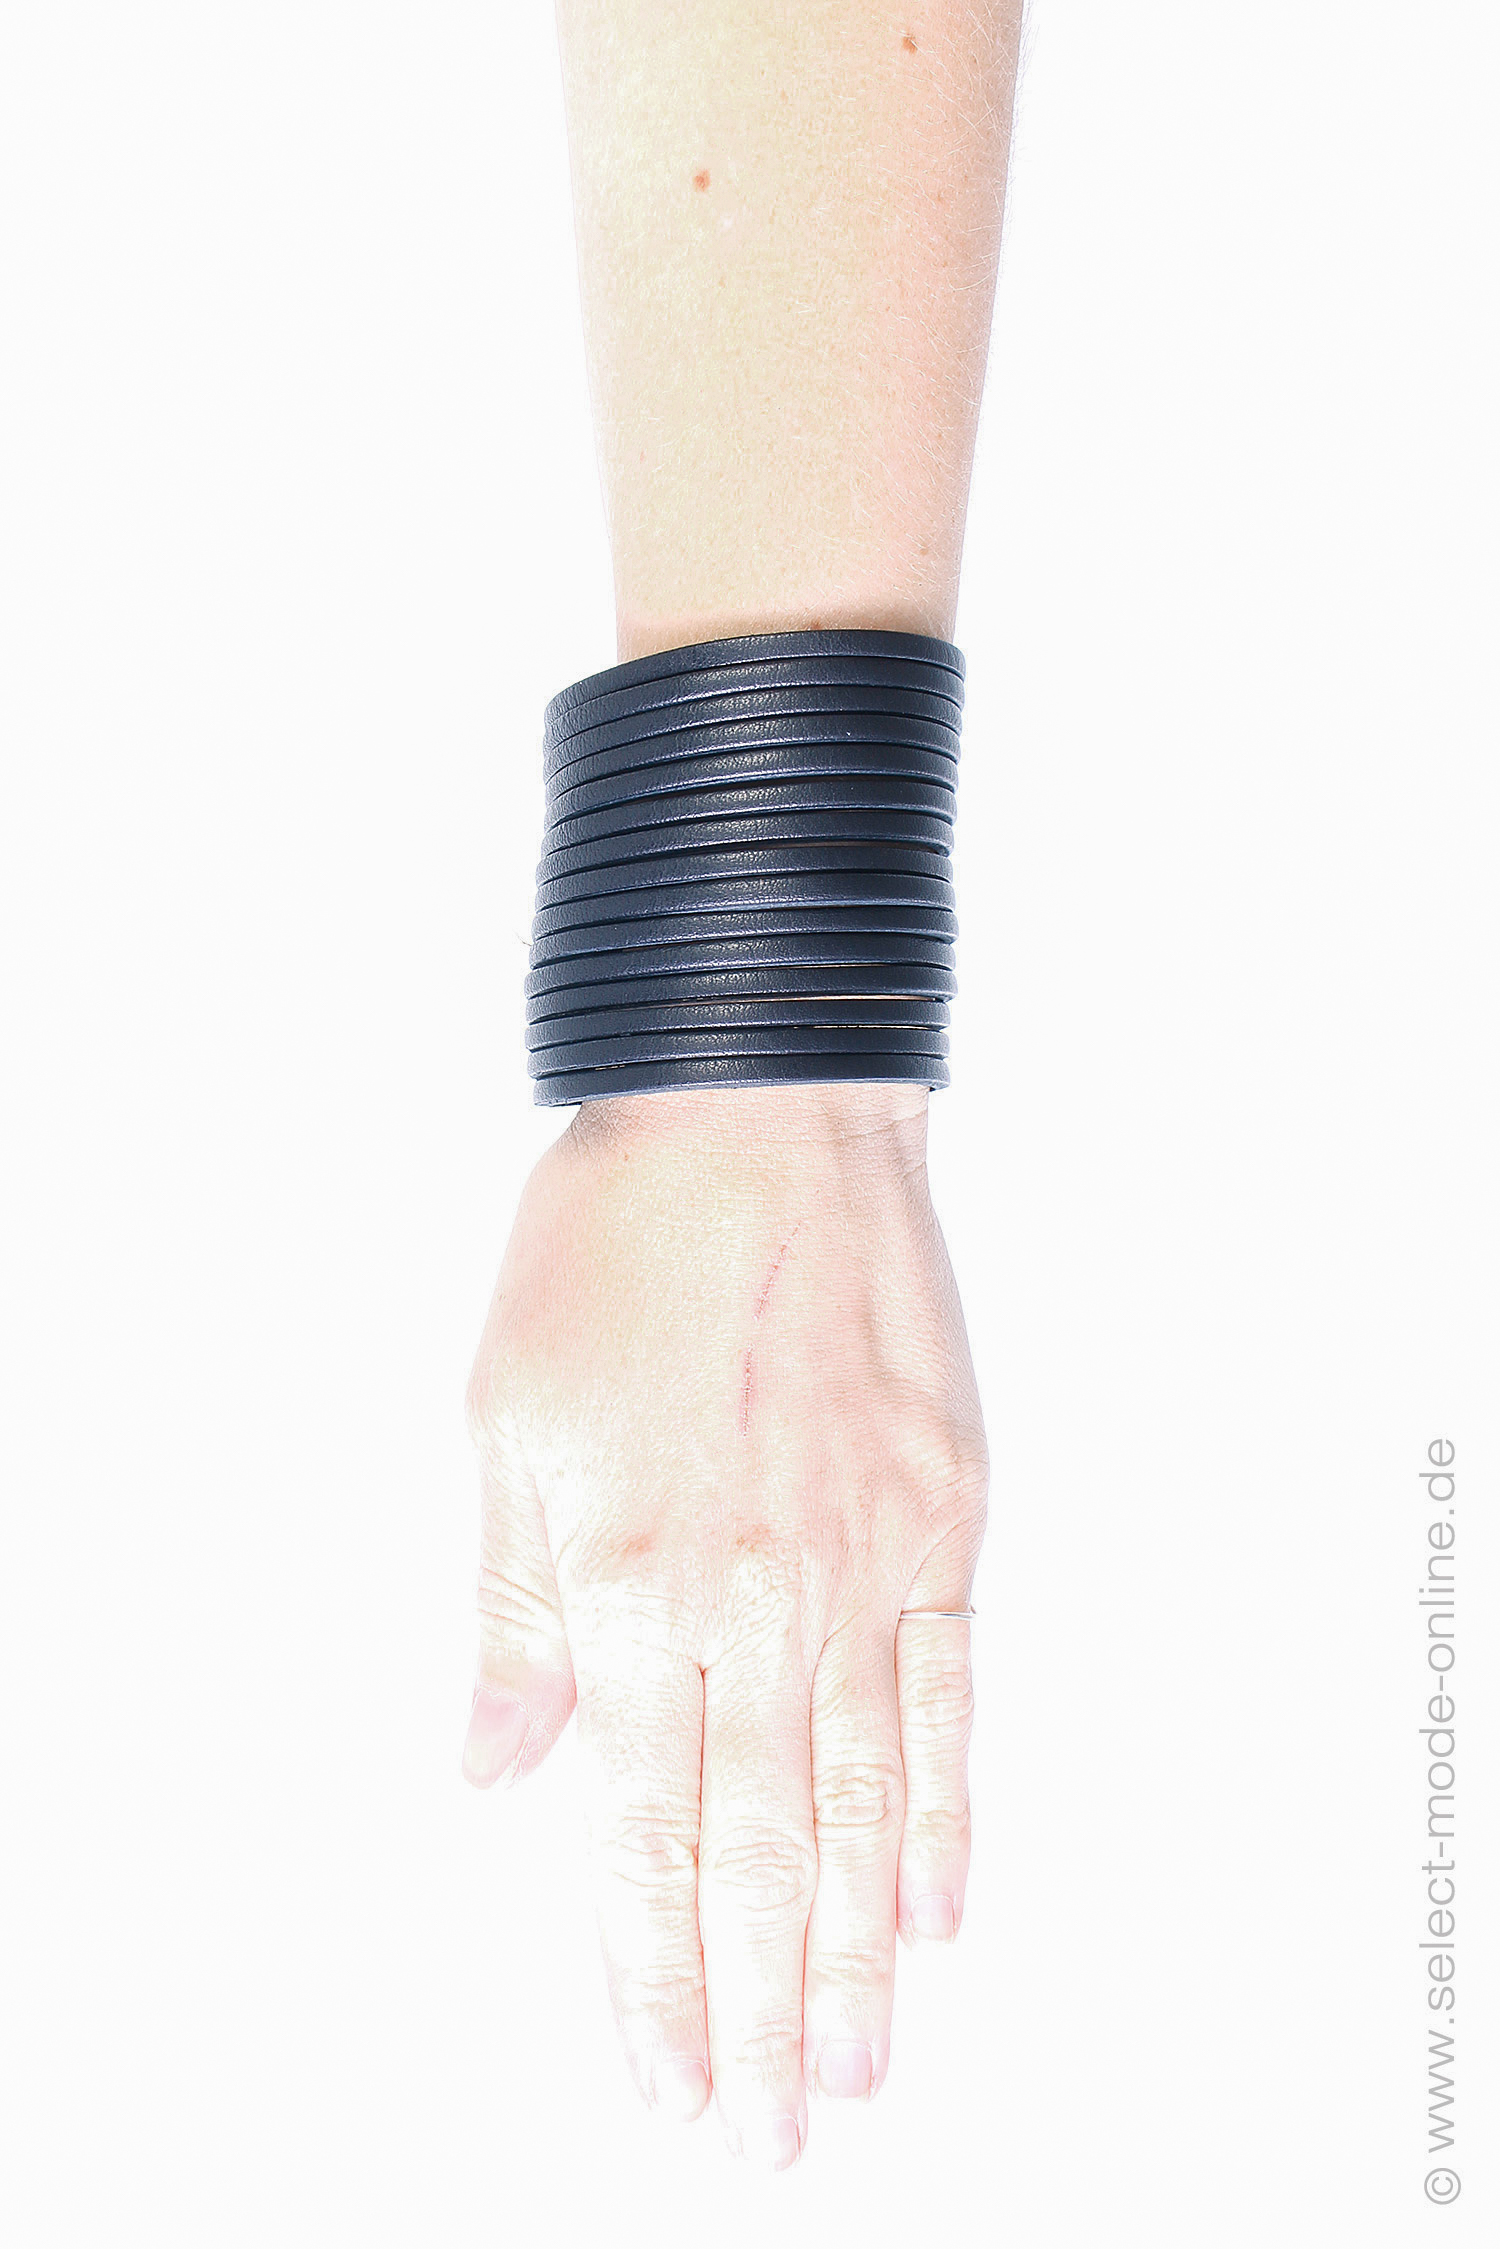 Leather Bracelet - black - L